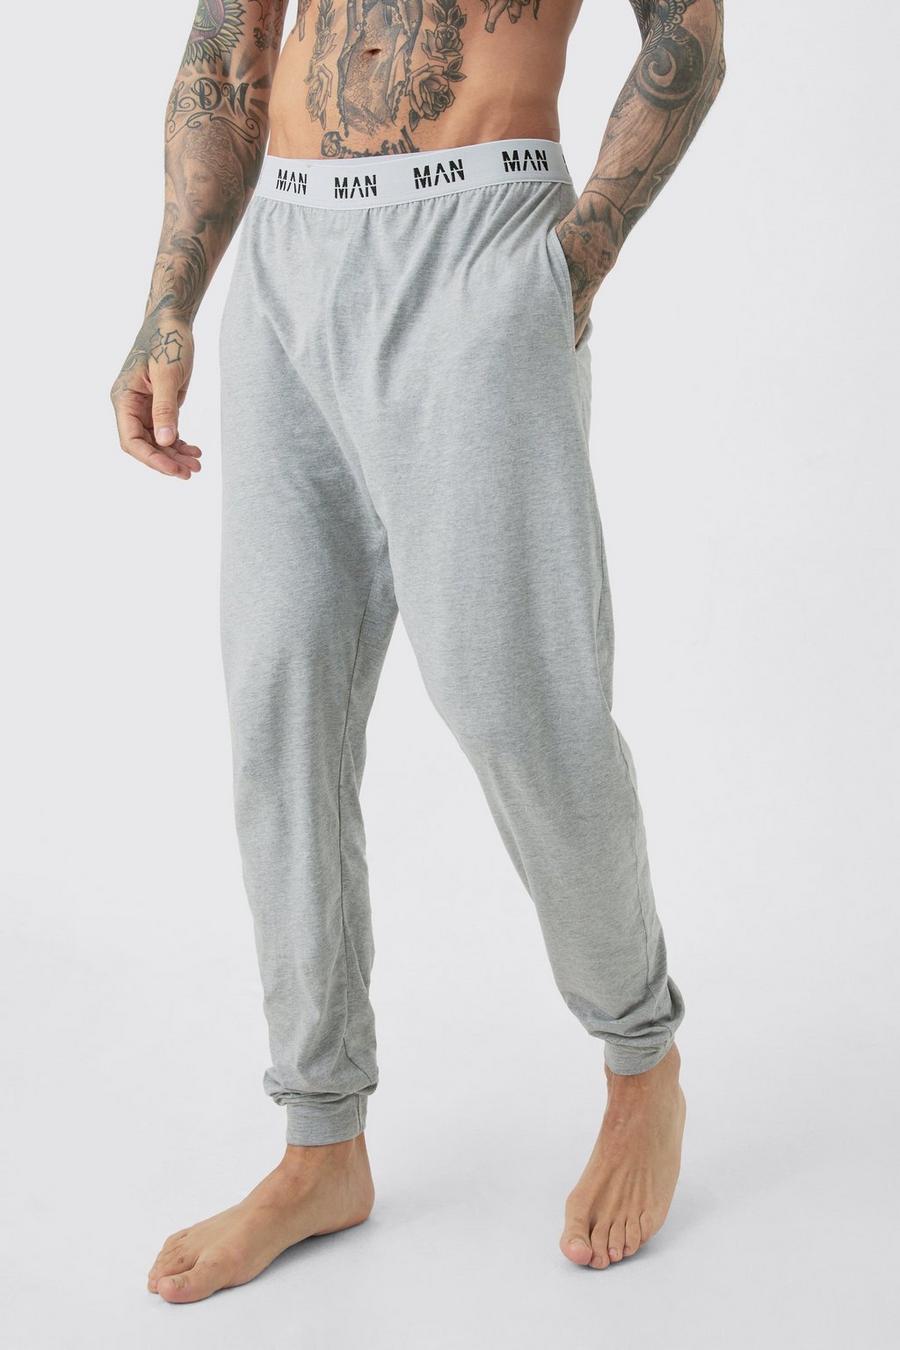 Tall Man Loungewear Joggers In Grey Marl image number 1